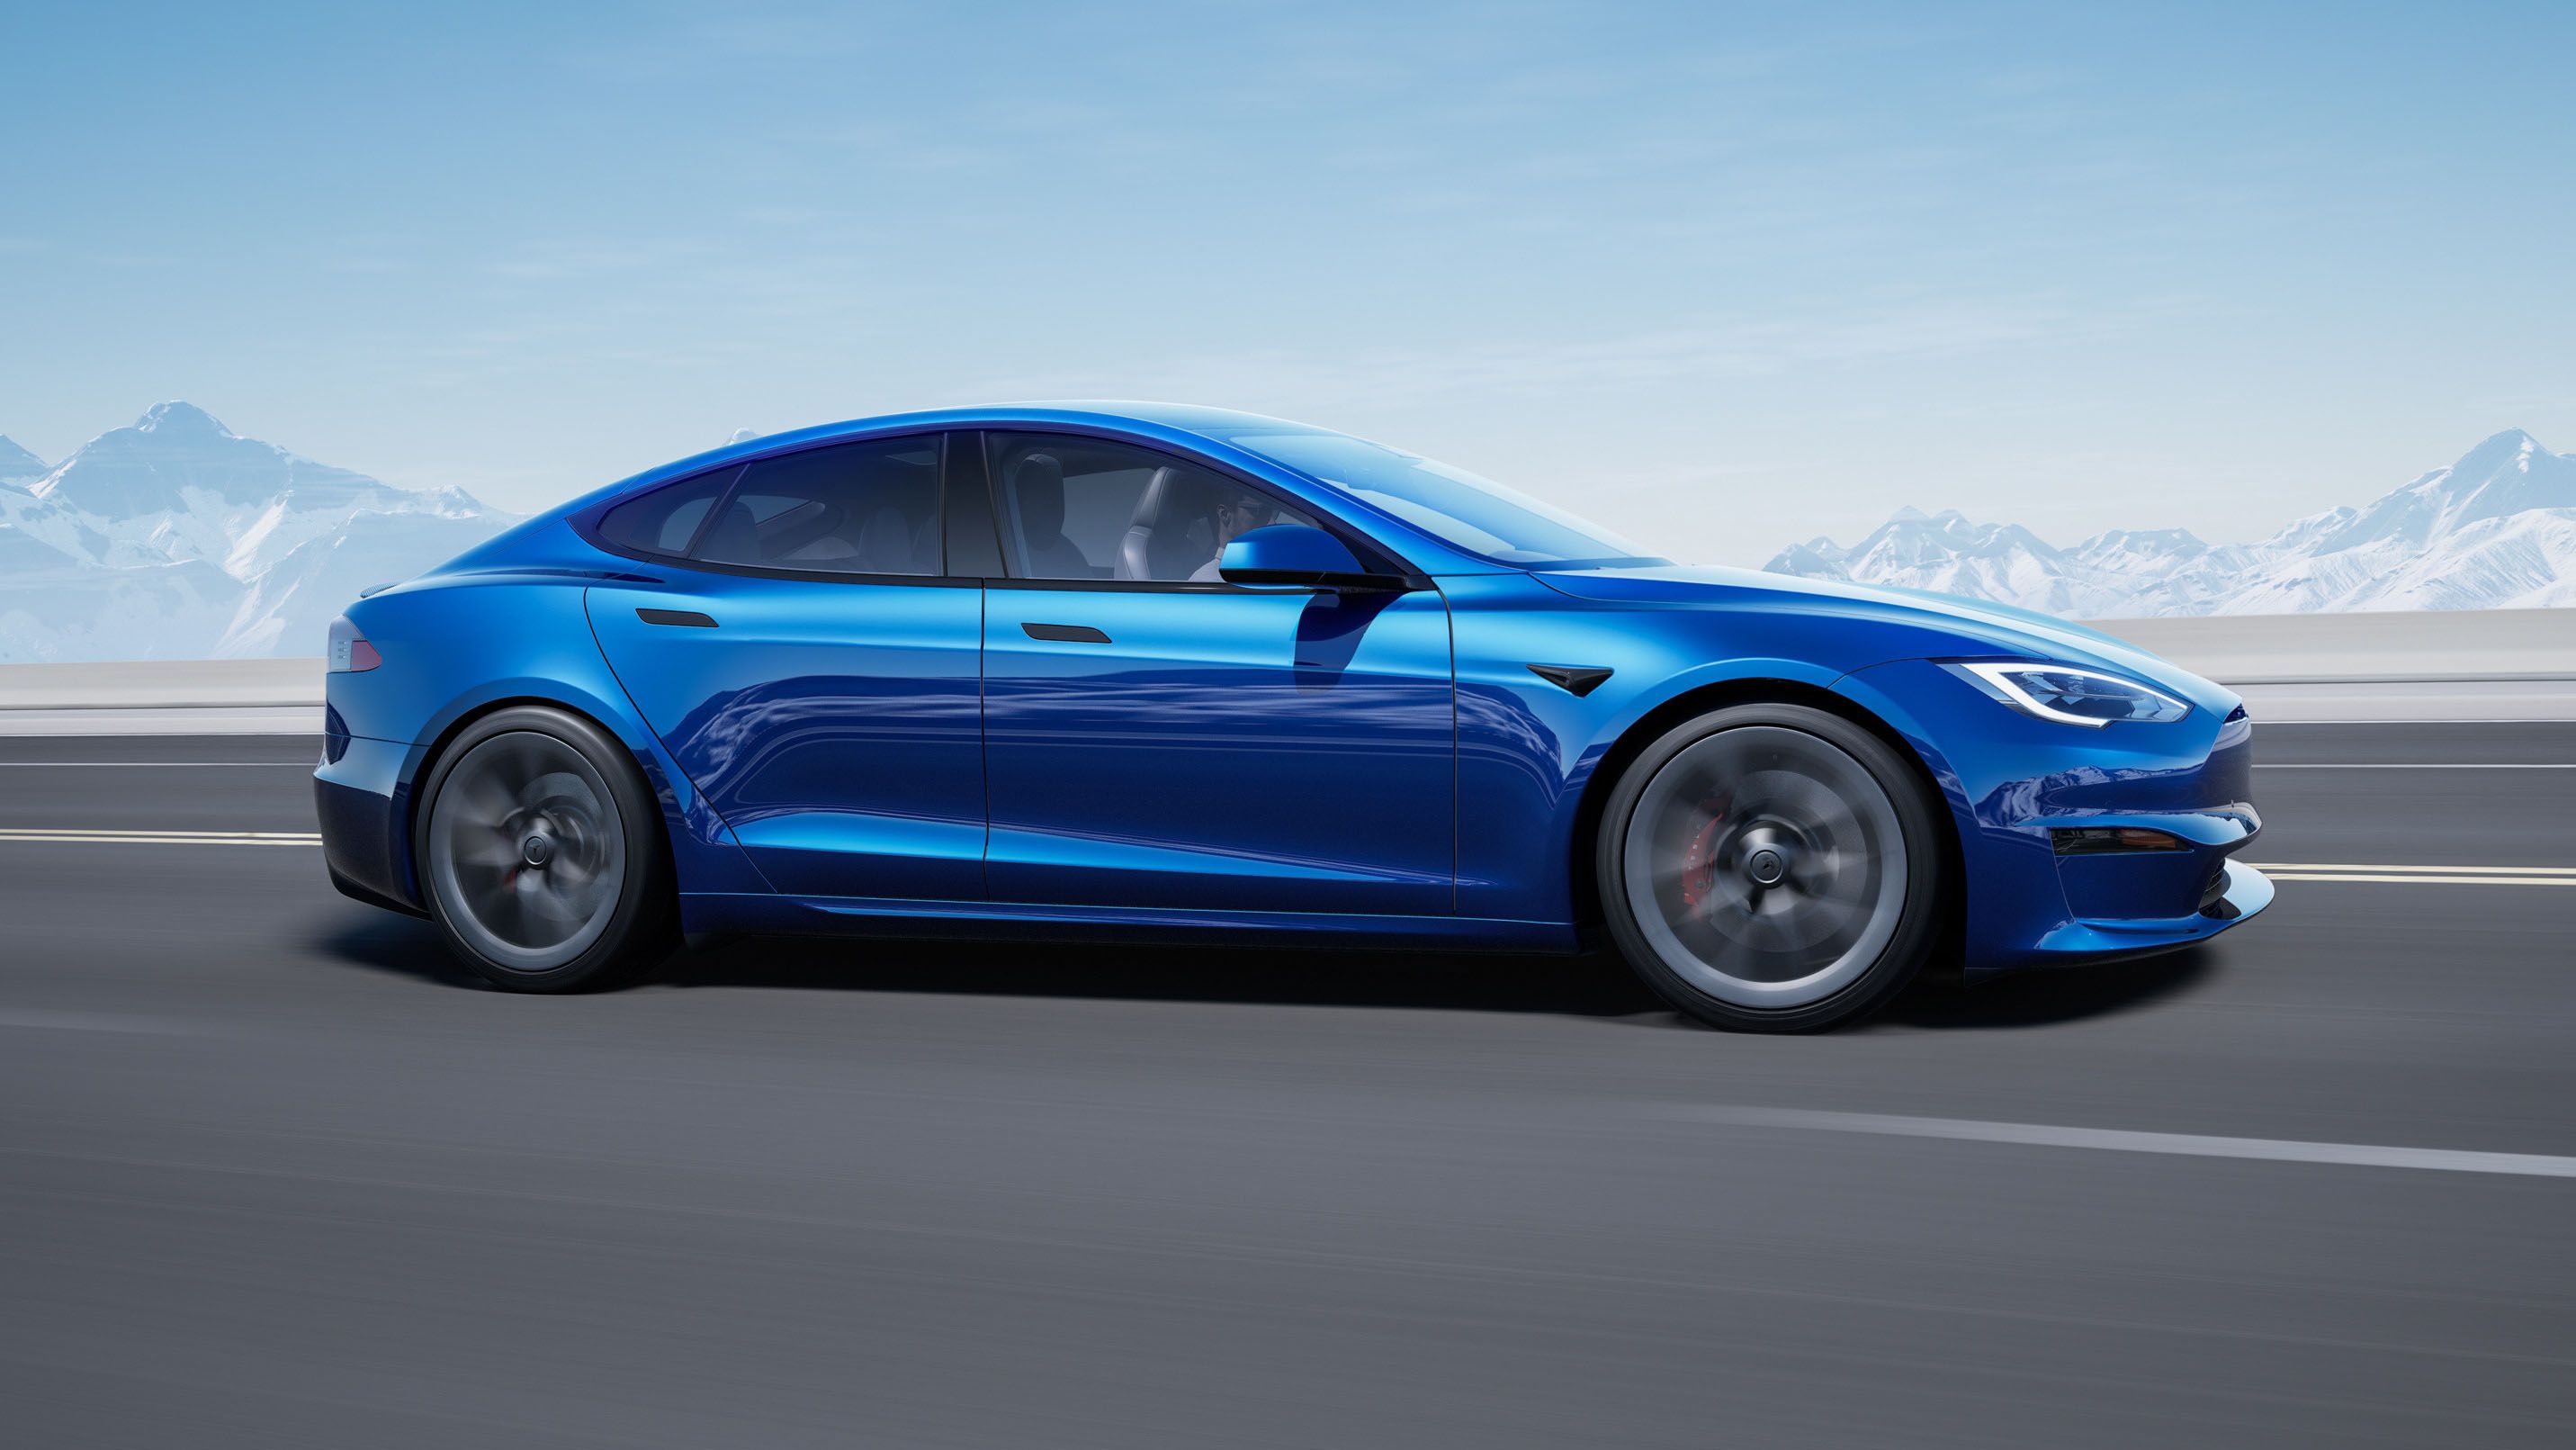 The Tesla Model S Plaid